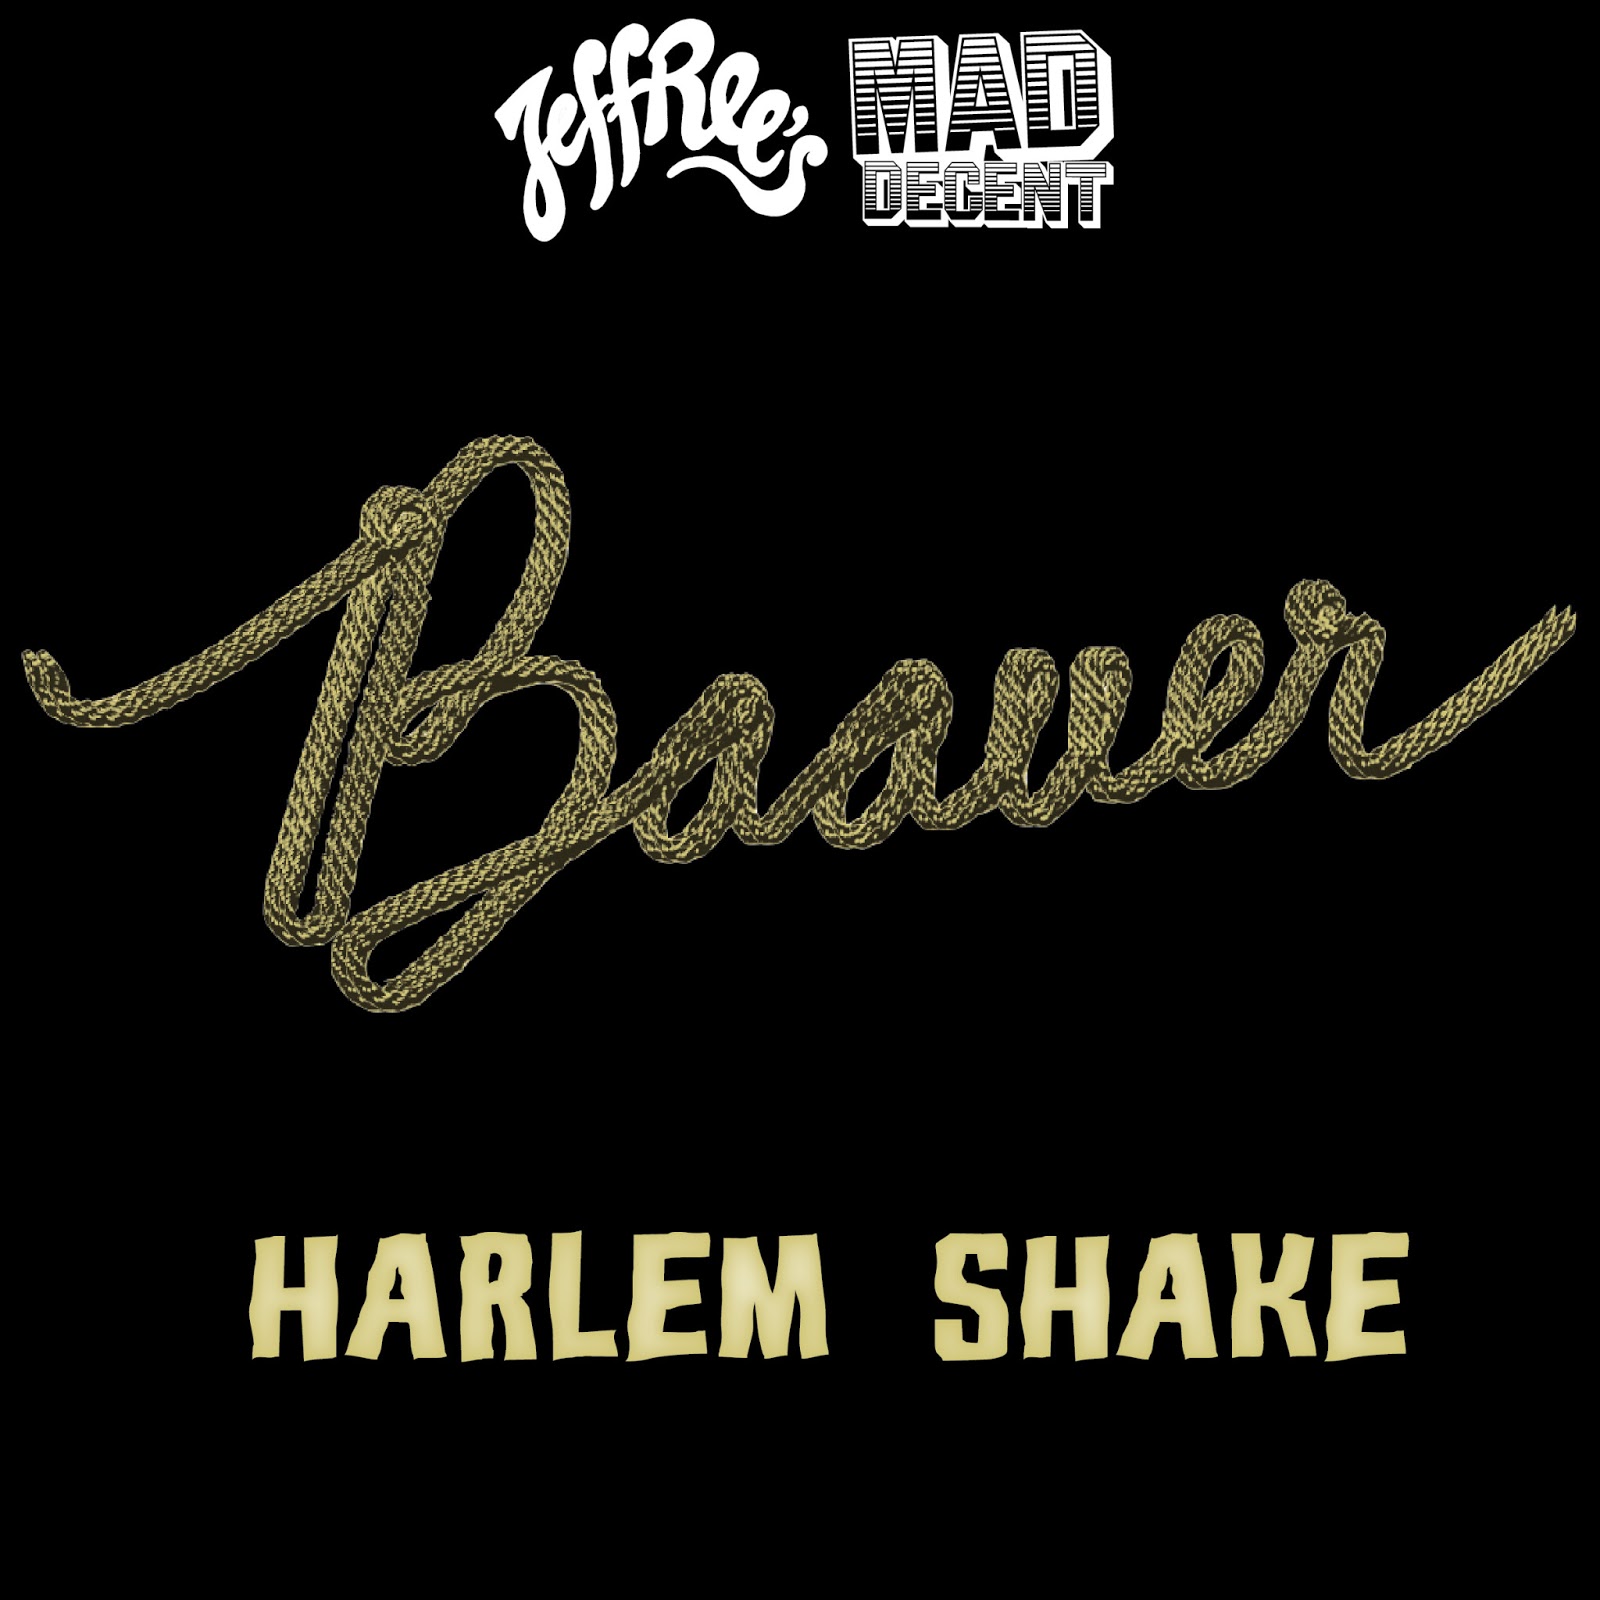 http://3.bp.blogspot.com/-lOXrW1Kyx6I/USZrTQ7lpCI/AAAAAAAAEnE/zsVU6yOeBGQ/s1600/Baauer+Harlem+Shake.png